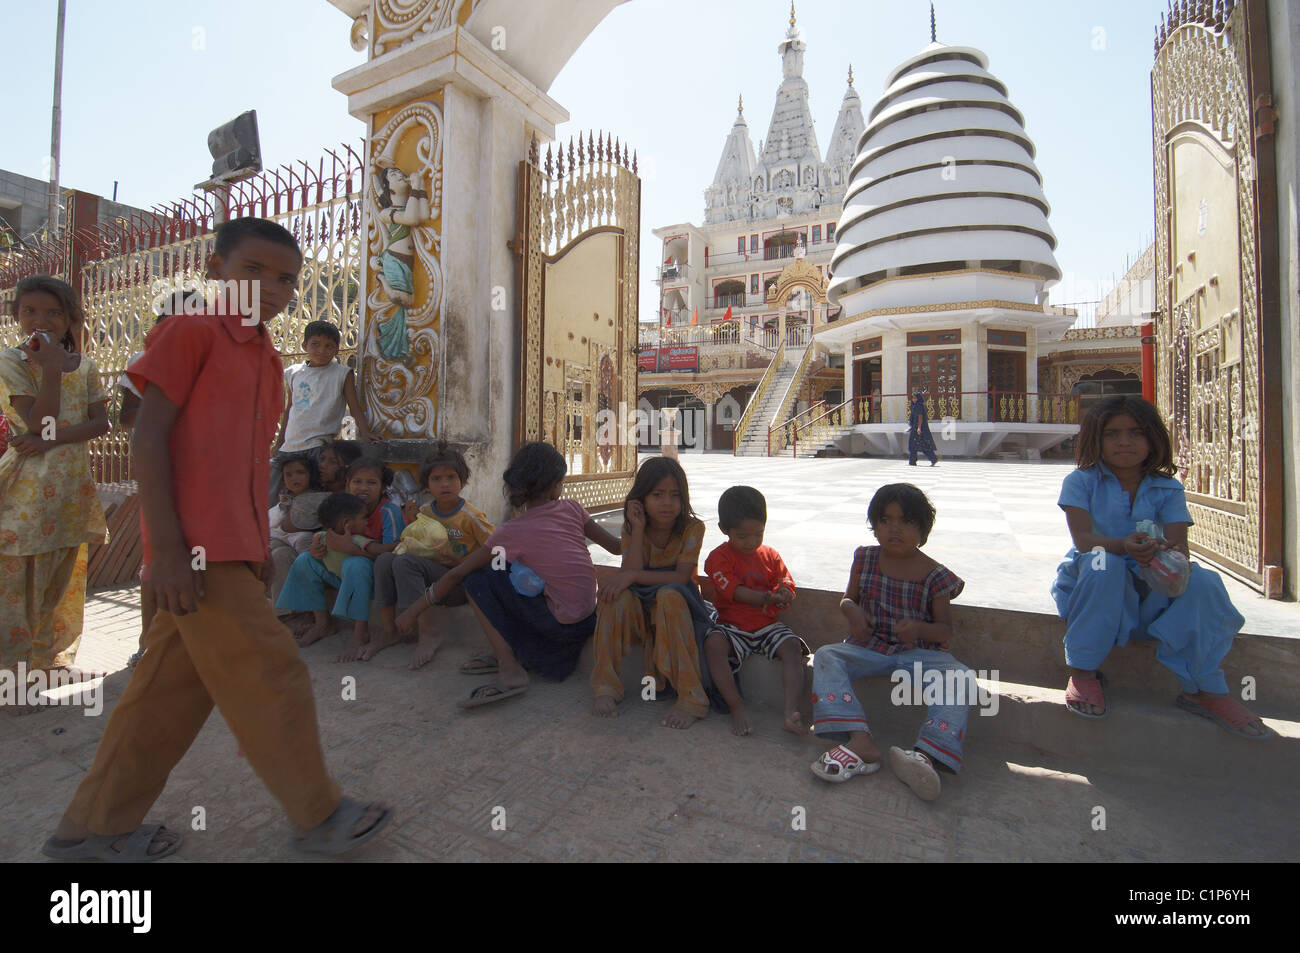 Children outside a religious temple in Ludhiana, Punjab, India. Stock Photo